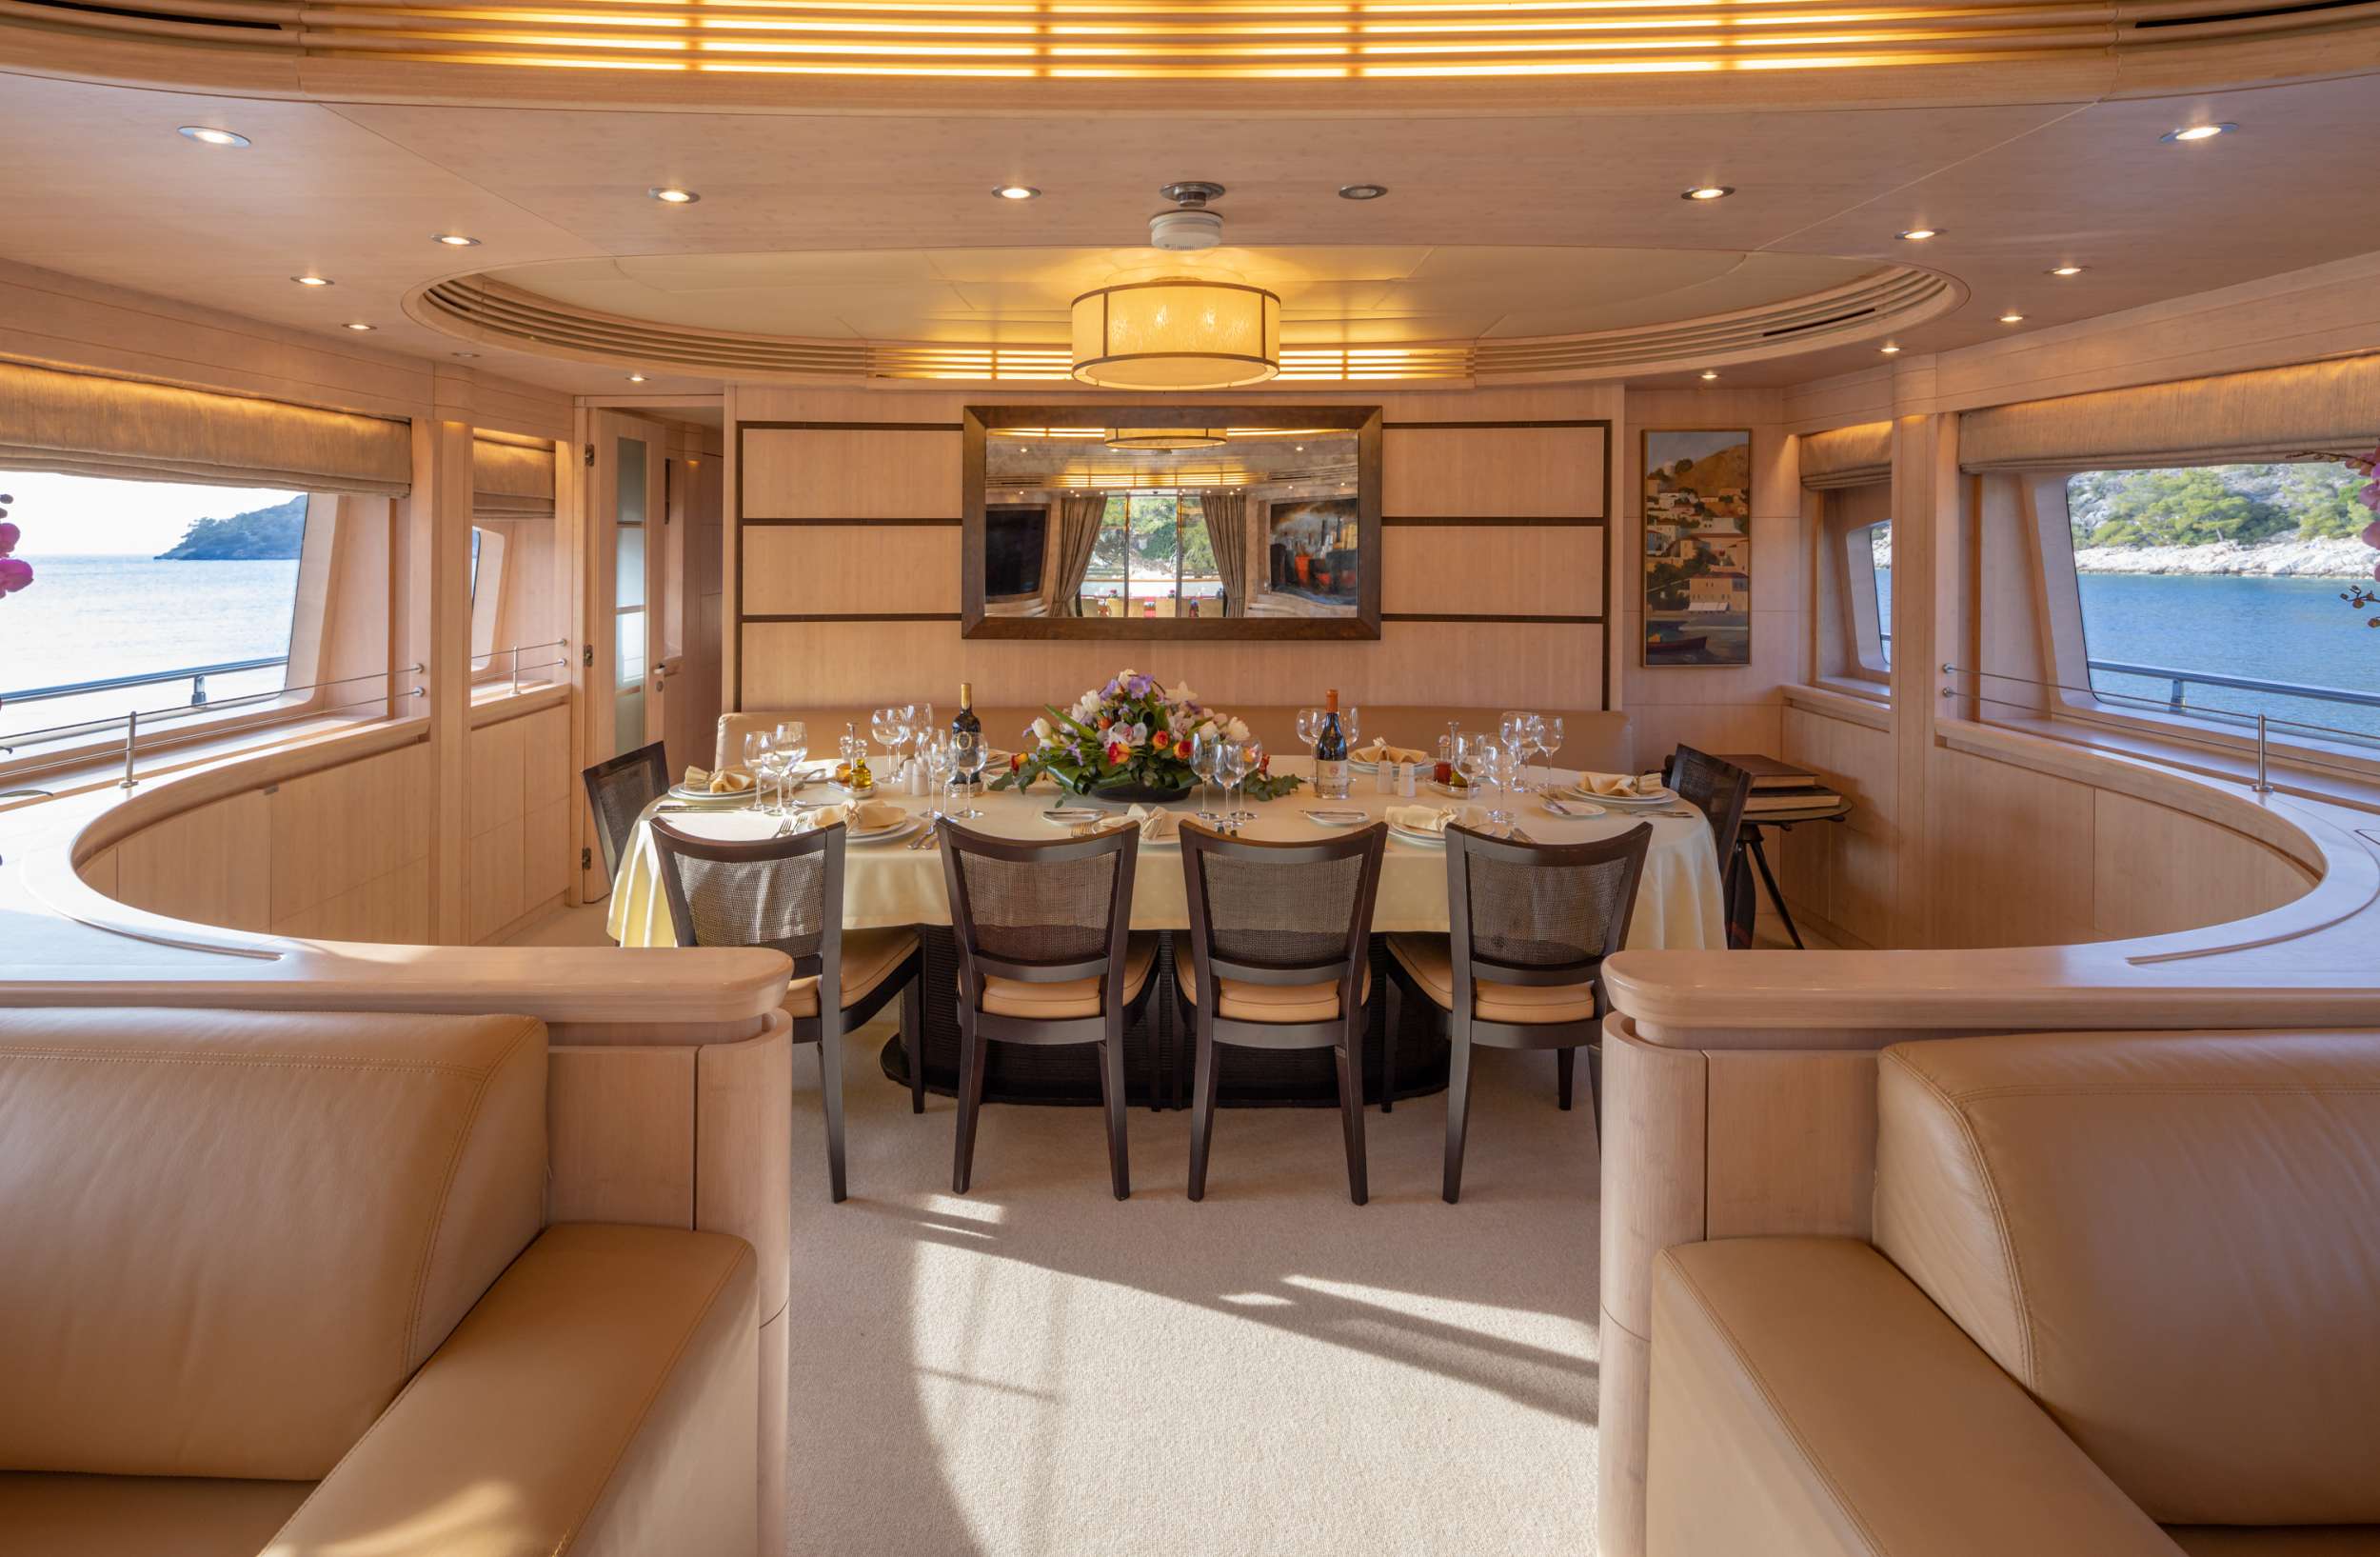 GLAROS Yacht Charter - Dining